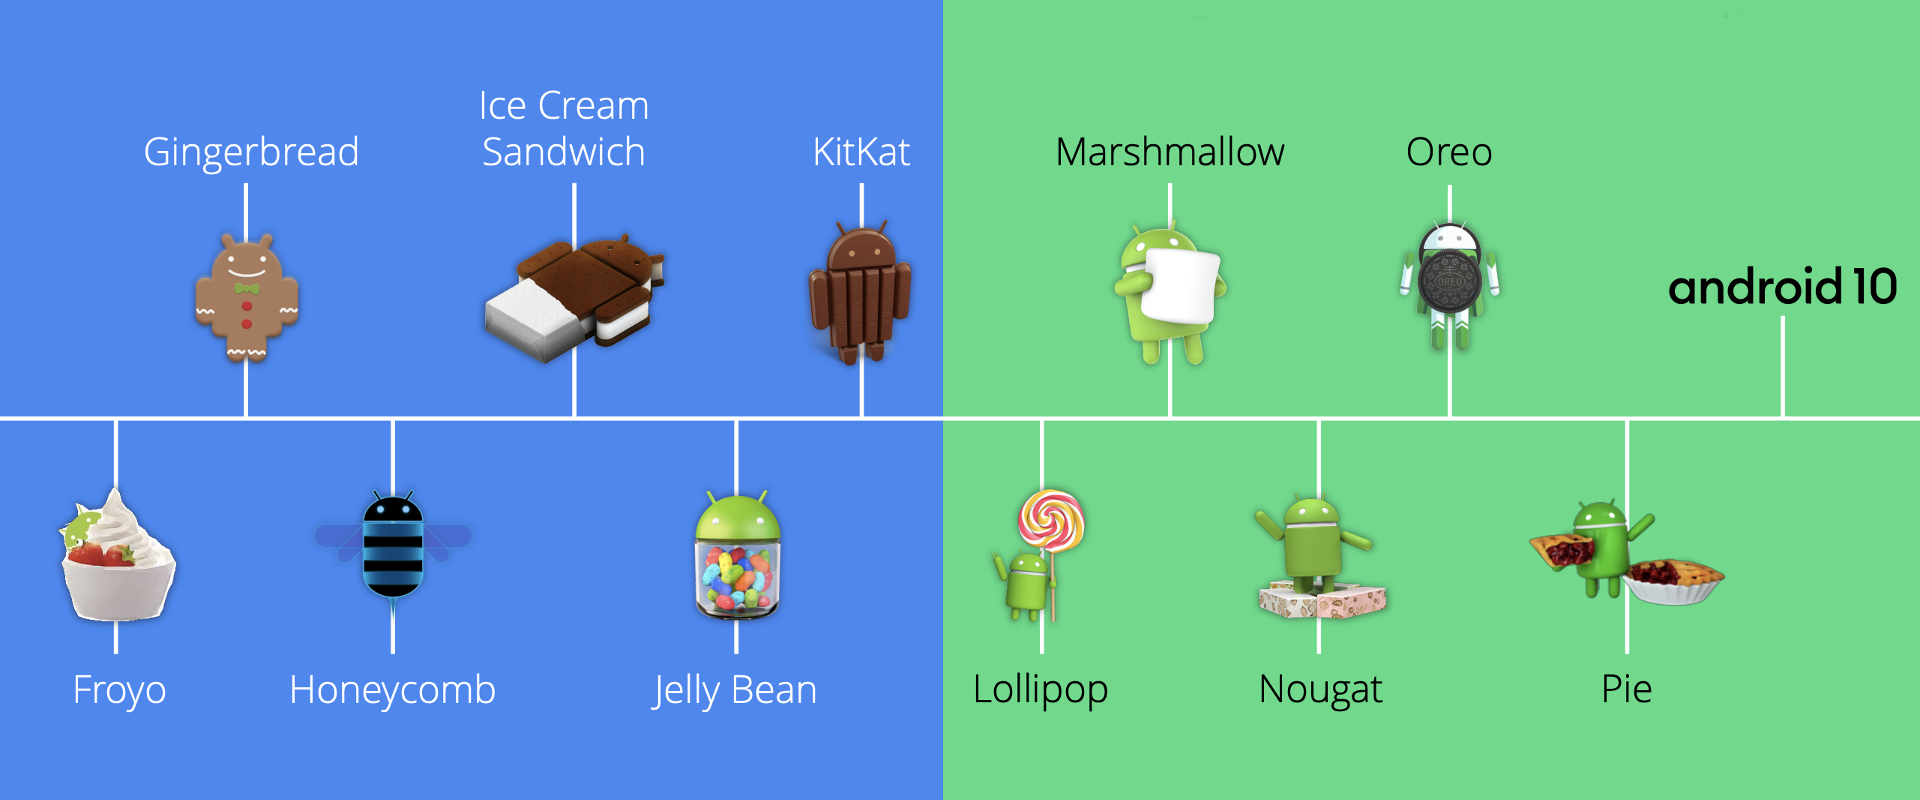 Полная история андроид. Эволюция Android. Эволюция до андроида. Эволюция интерфейса Android. Эволюция андроид версий.